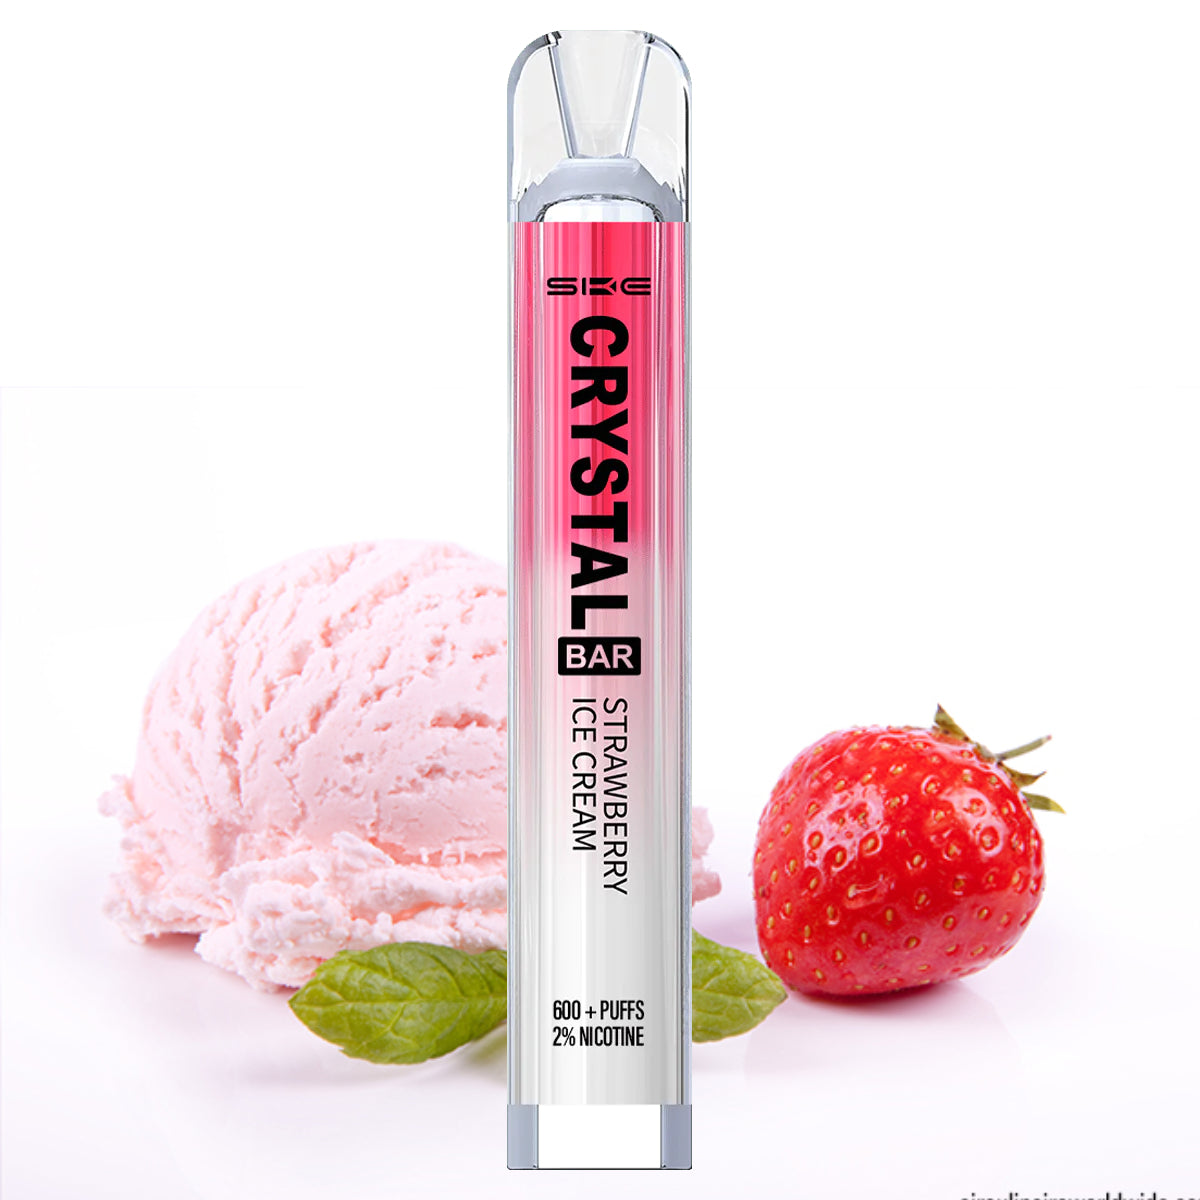 SKE Crystal Bar 2% Nicotine Disposable 600 Puffs Vape - Strawberry Ice-cream